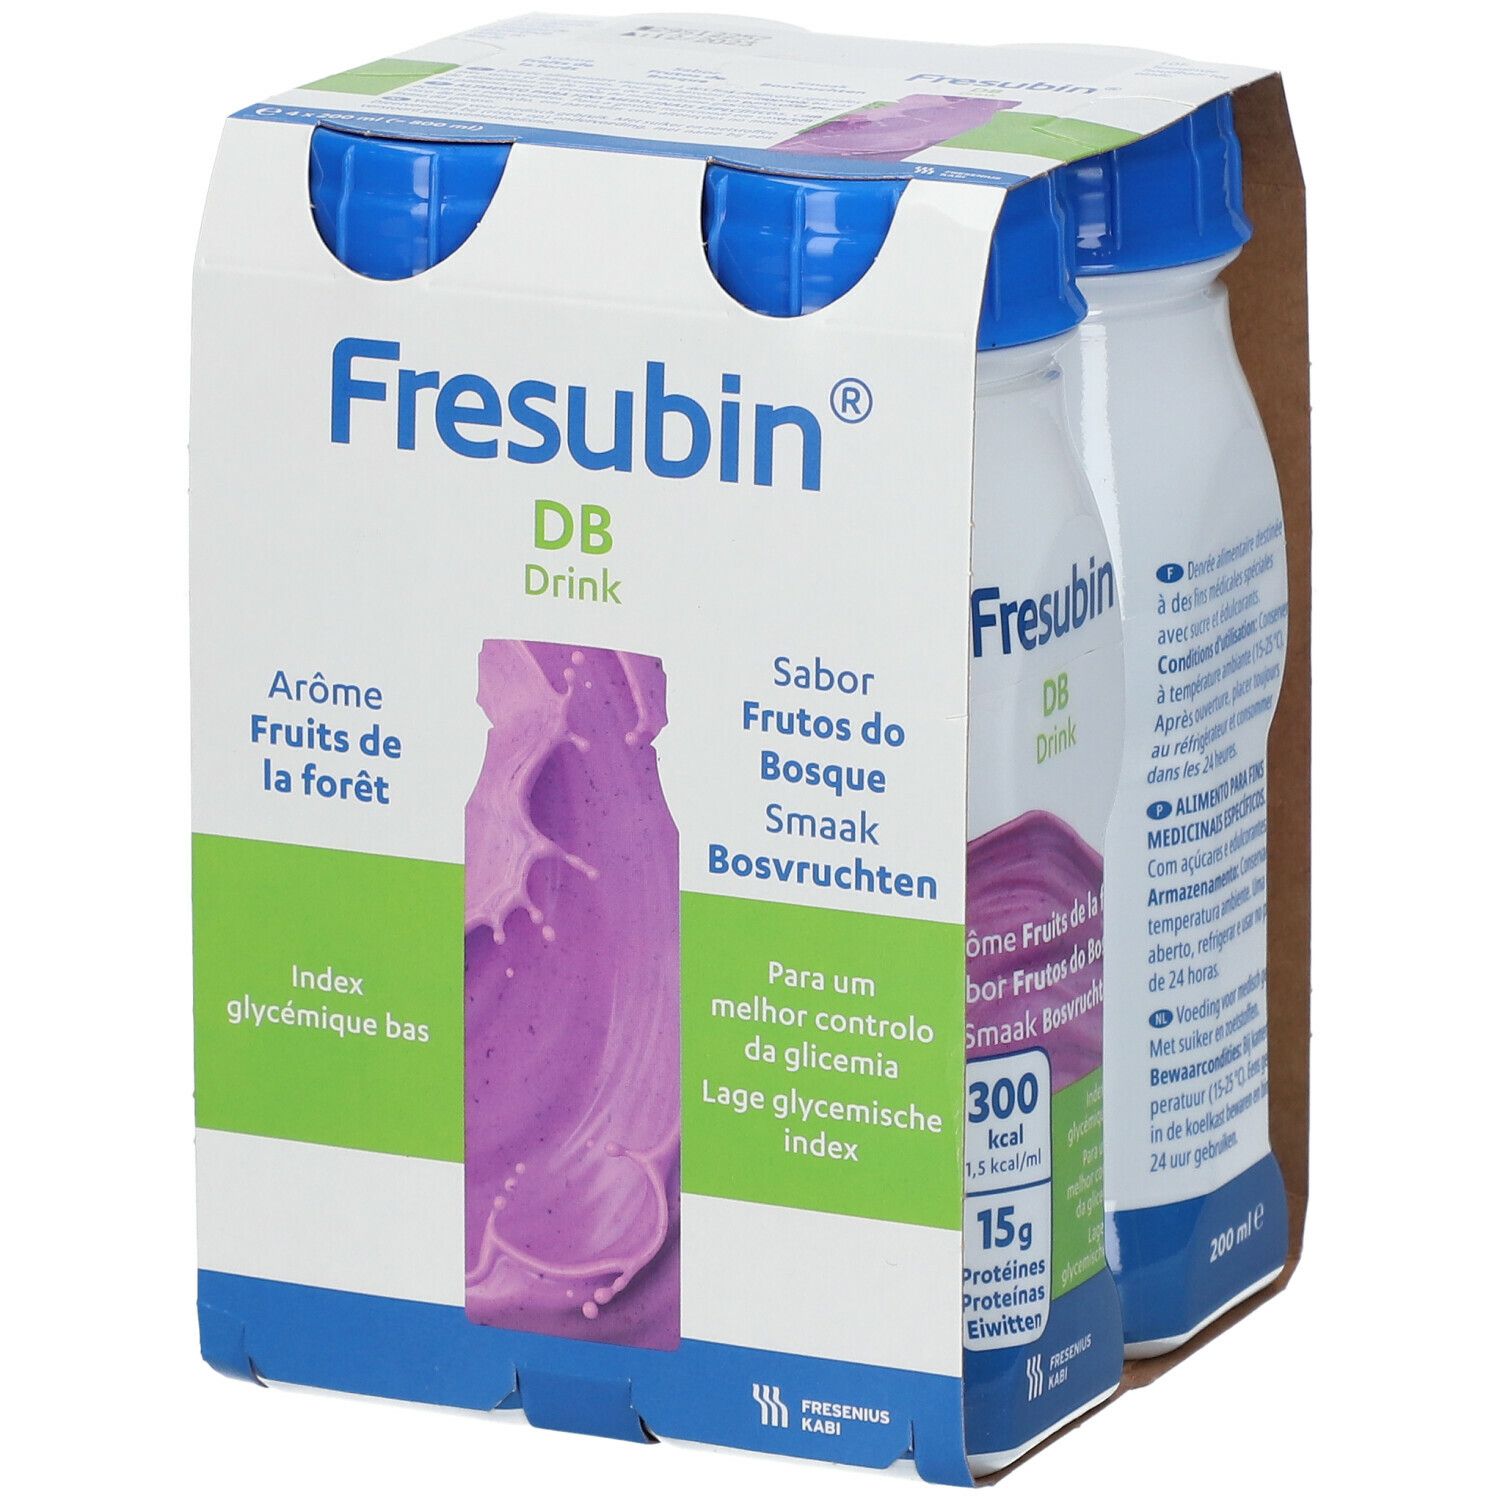 Fresubin® DB Drink Fruits de la Forêt